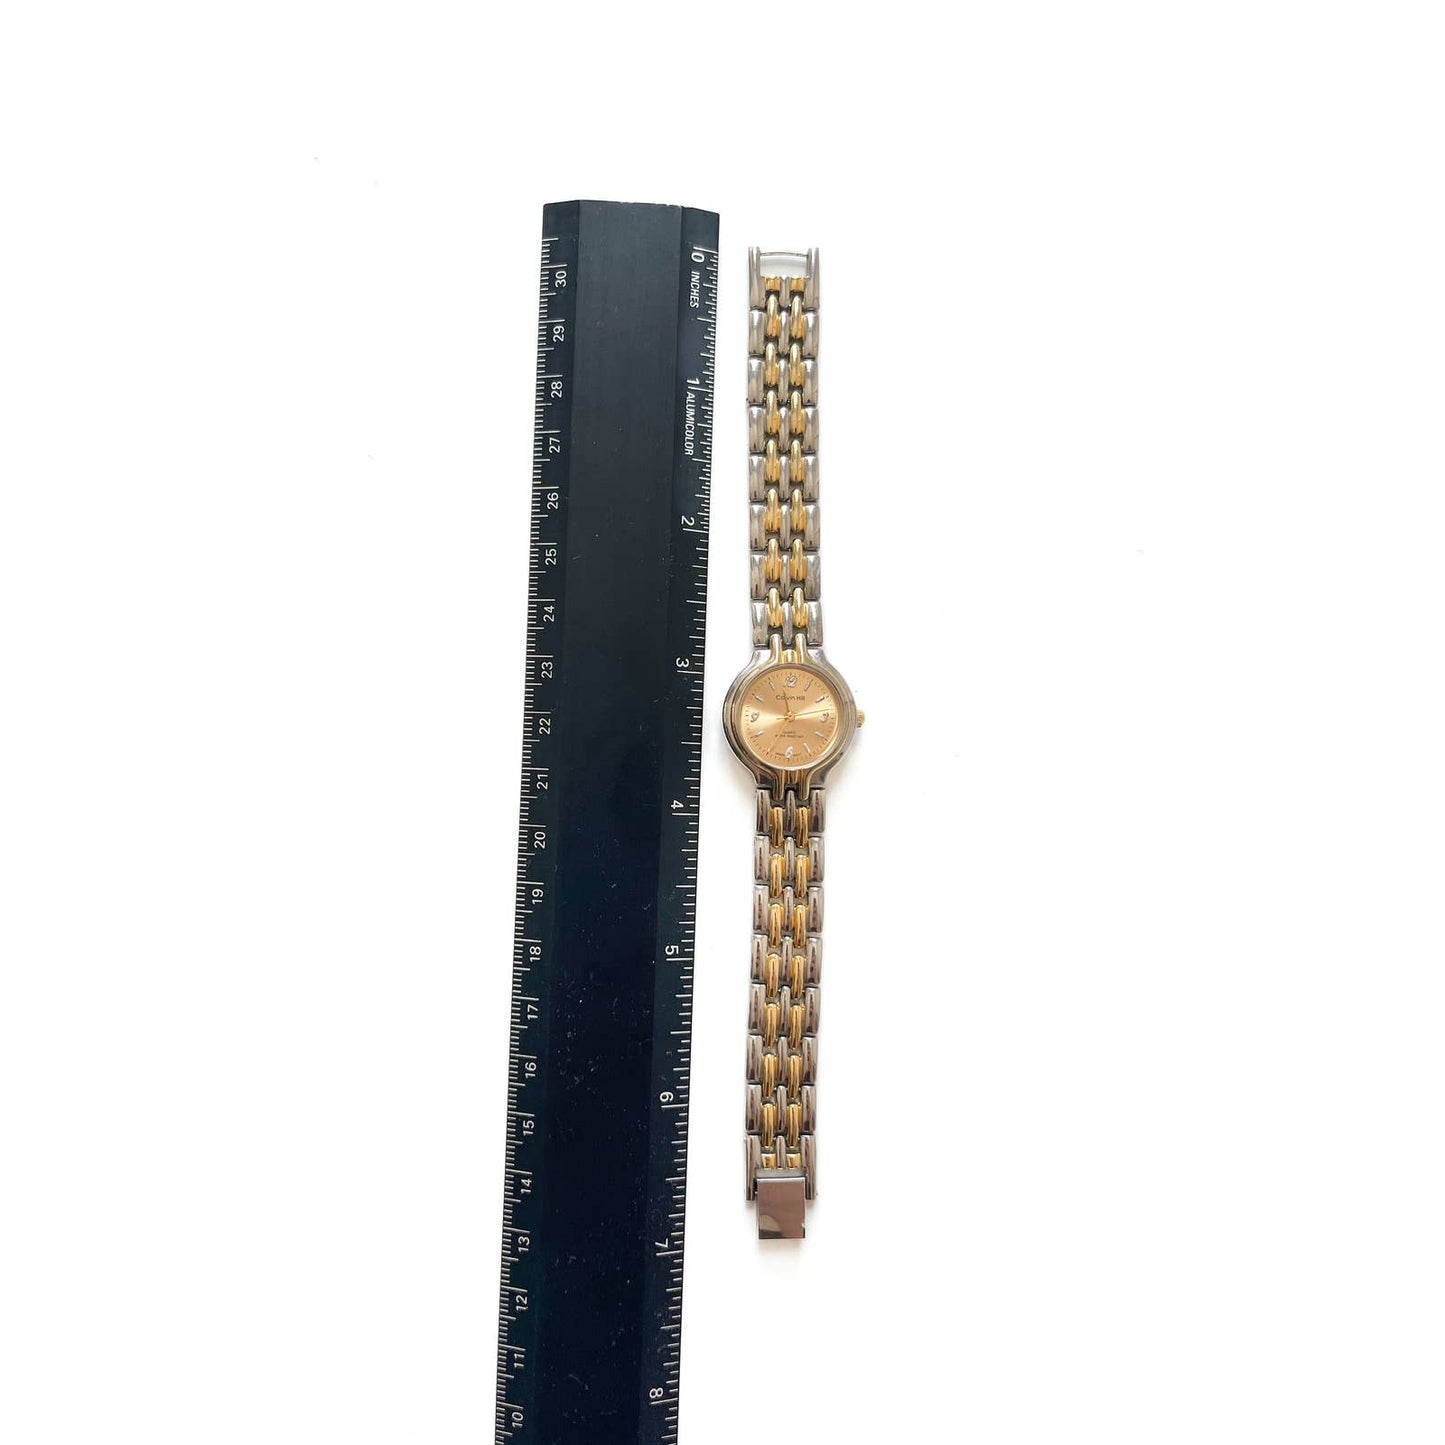 Vintage Two Tone Gold Bracelet Watch